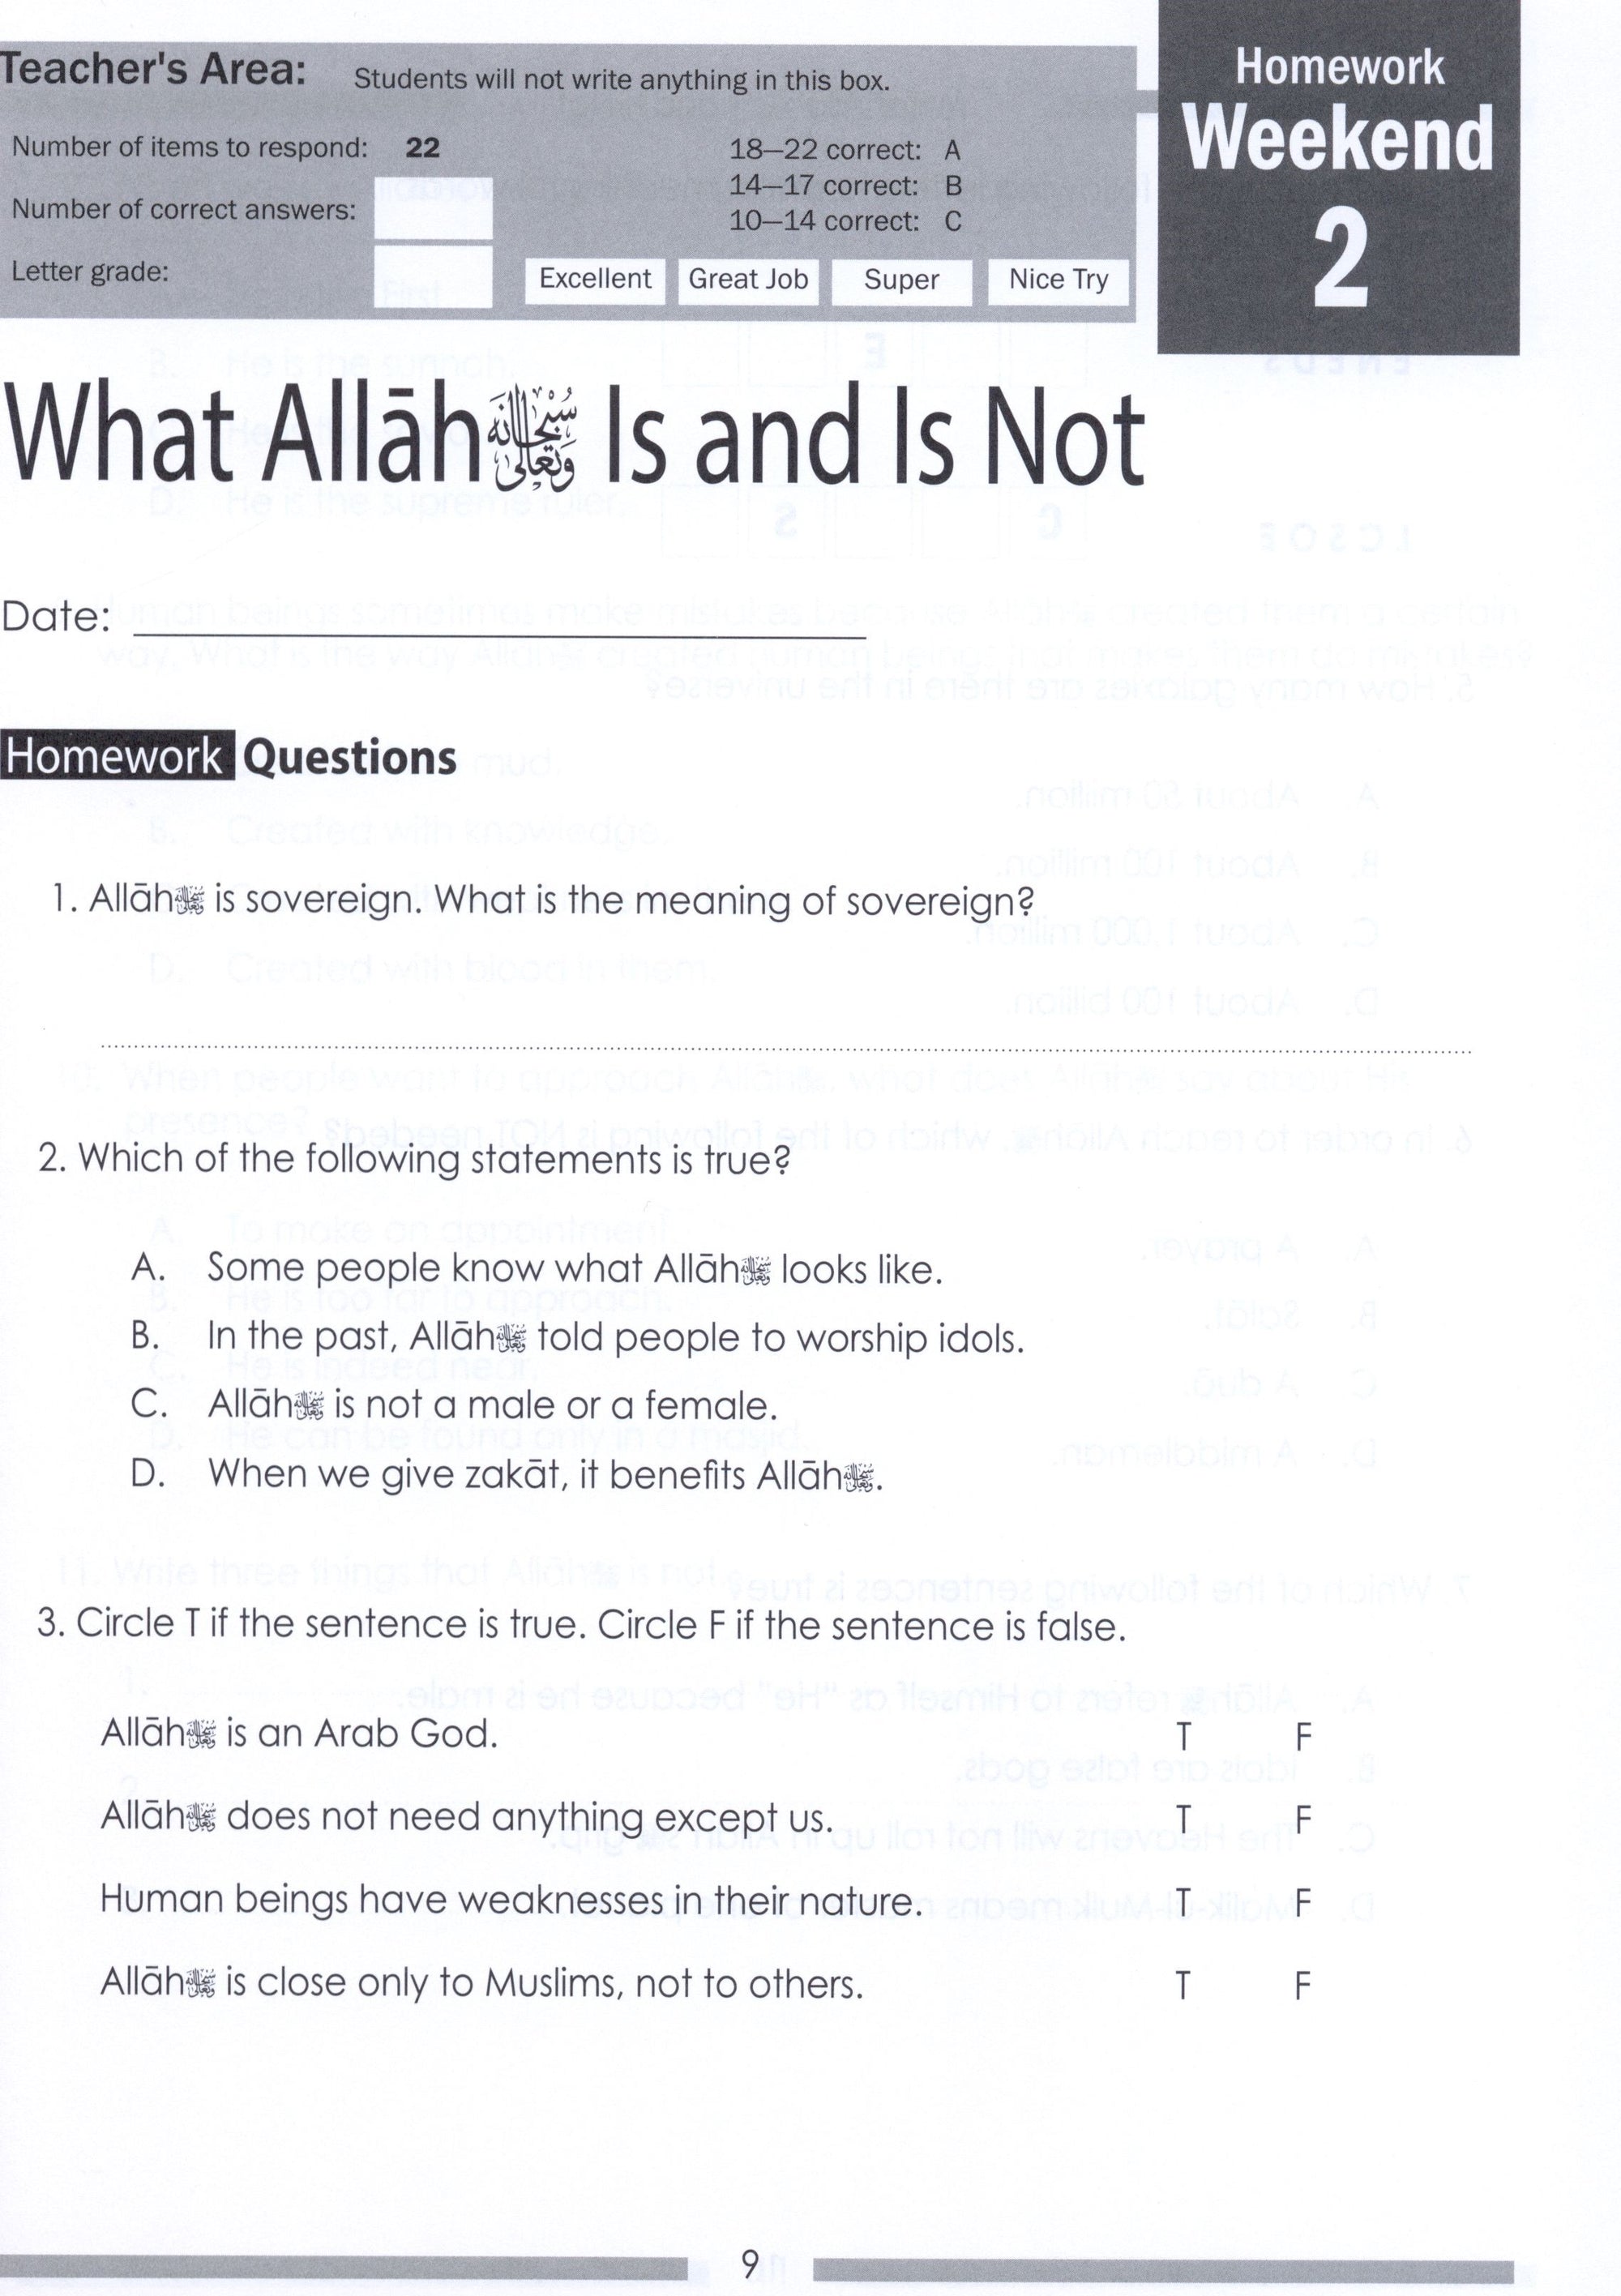 Weekend Learning Islamic Studies Workbook Level 3